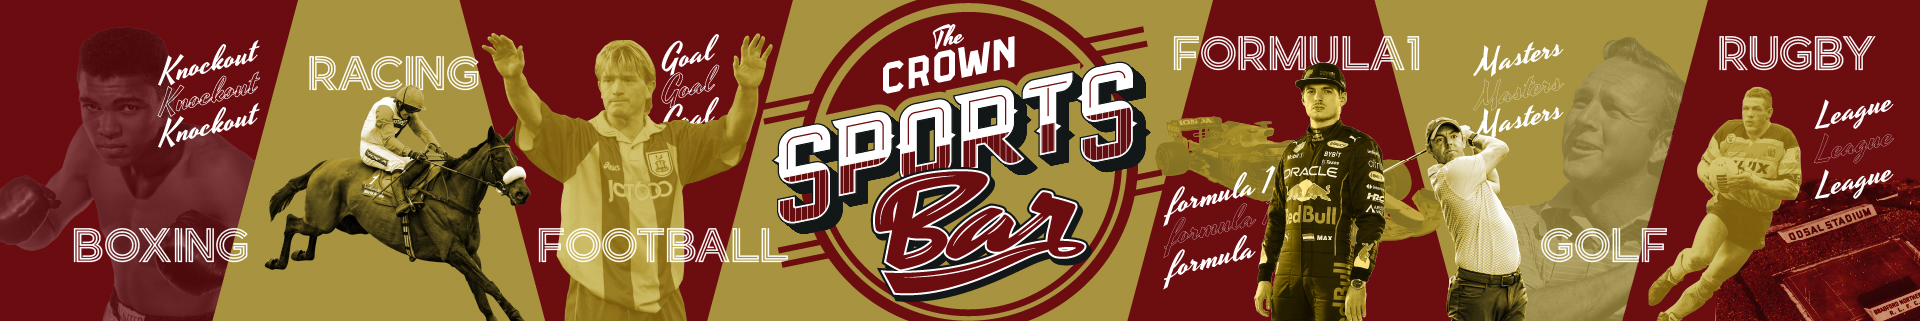 CROWN-Sports Bar Website Footer Strap Image